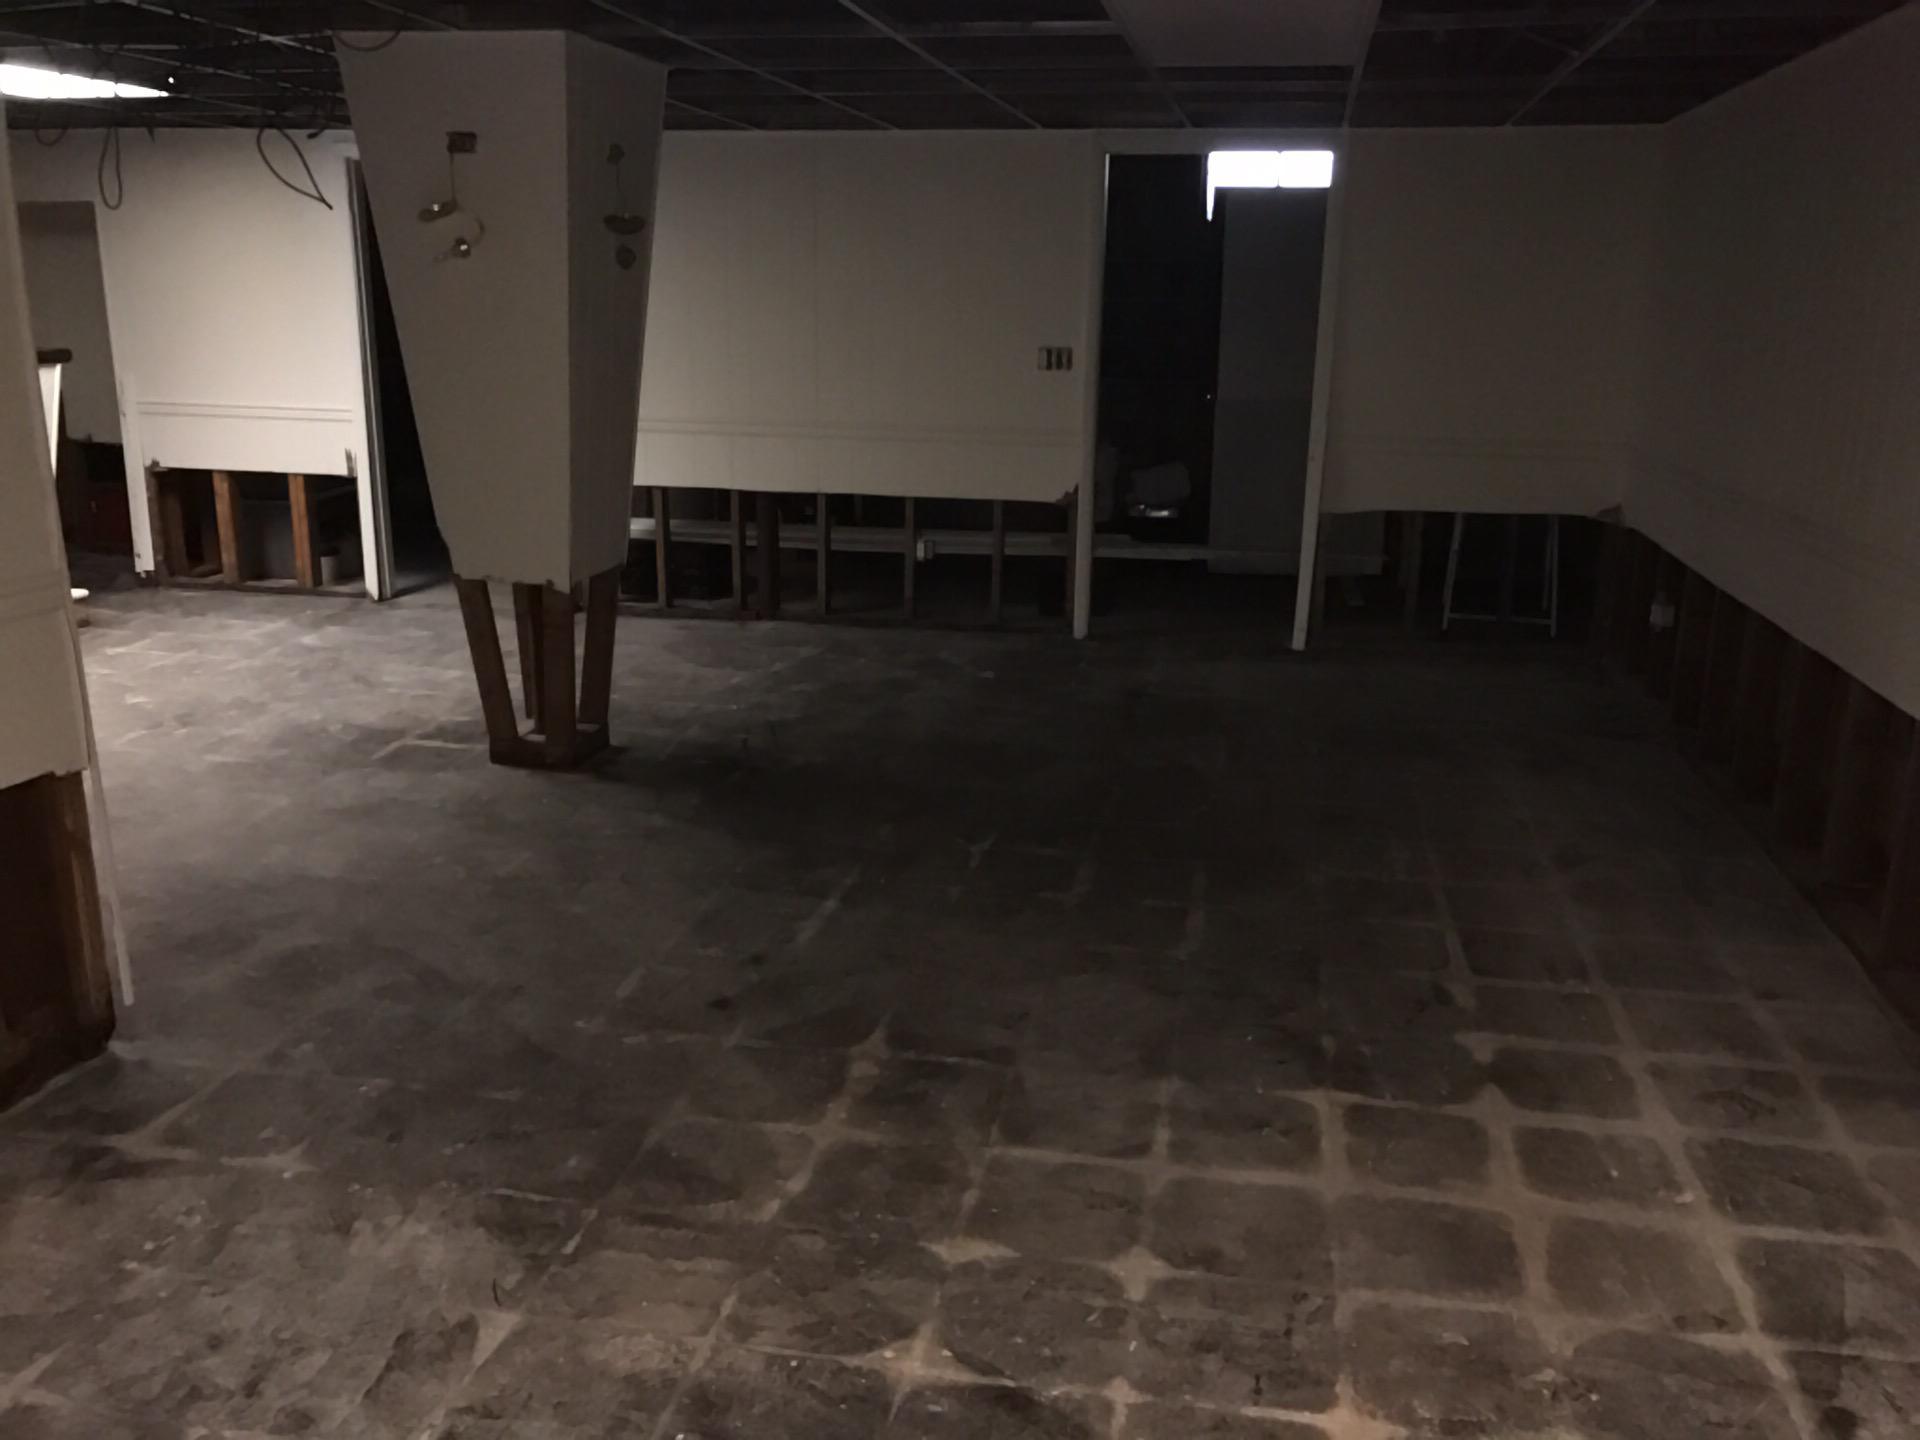 Affected basement flooring and walls